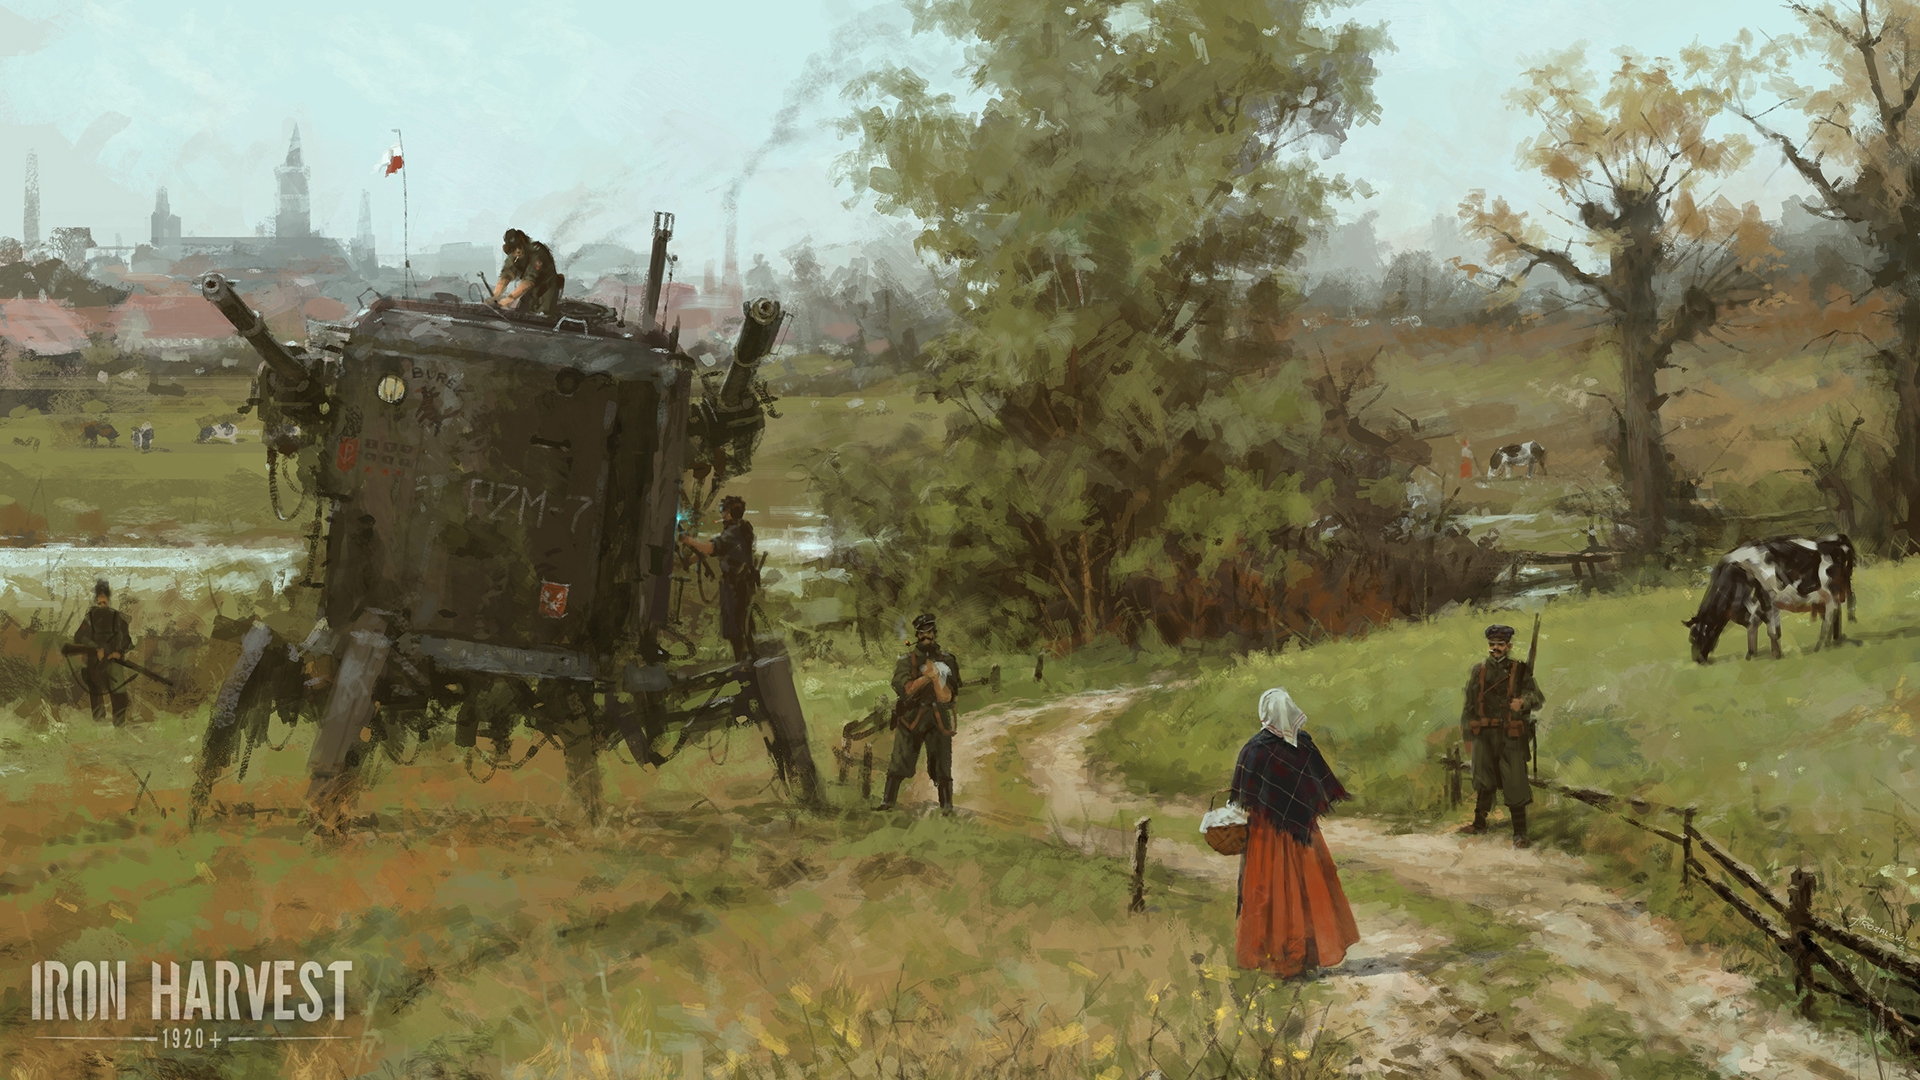 General 1920x1080 Iron Harvest Polania Republic (Iron Harvest) mechs peasants soldier video game art